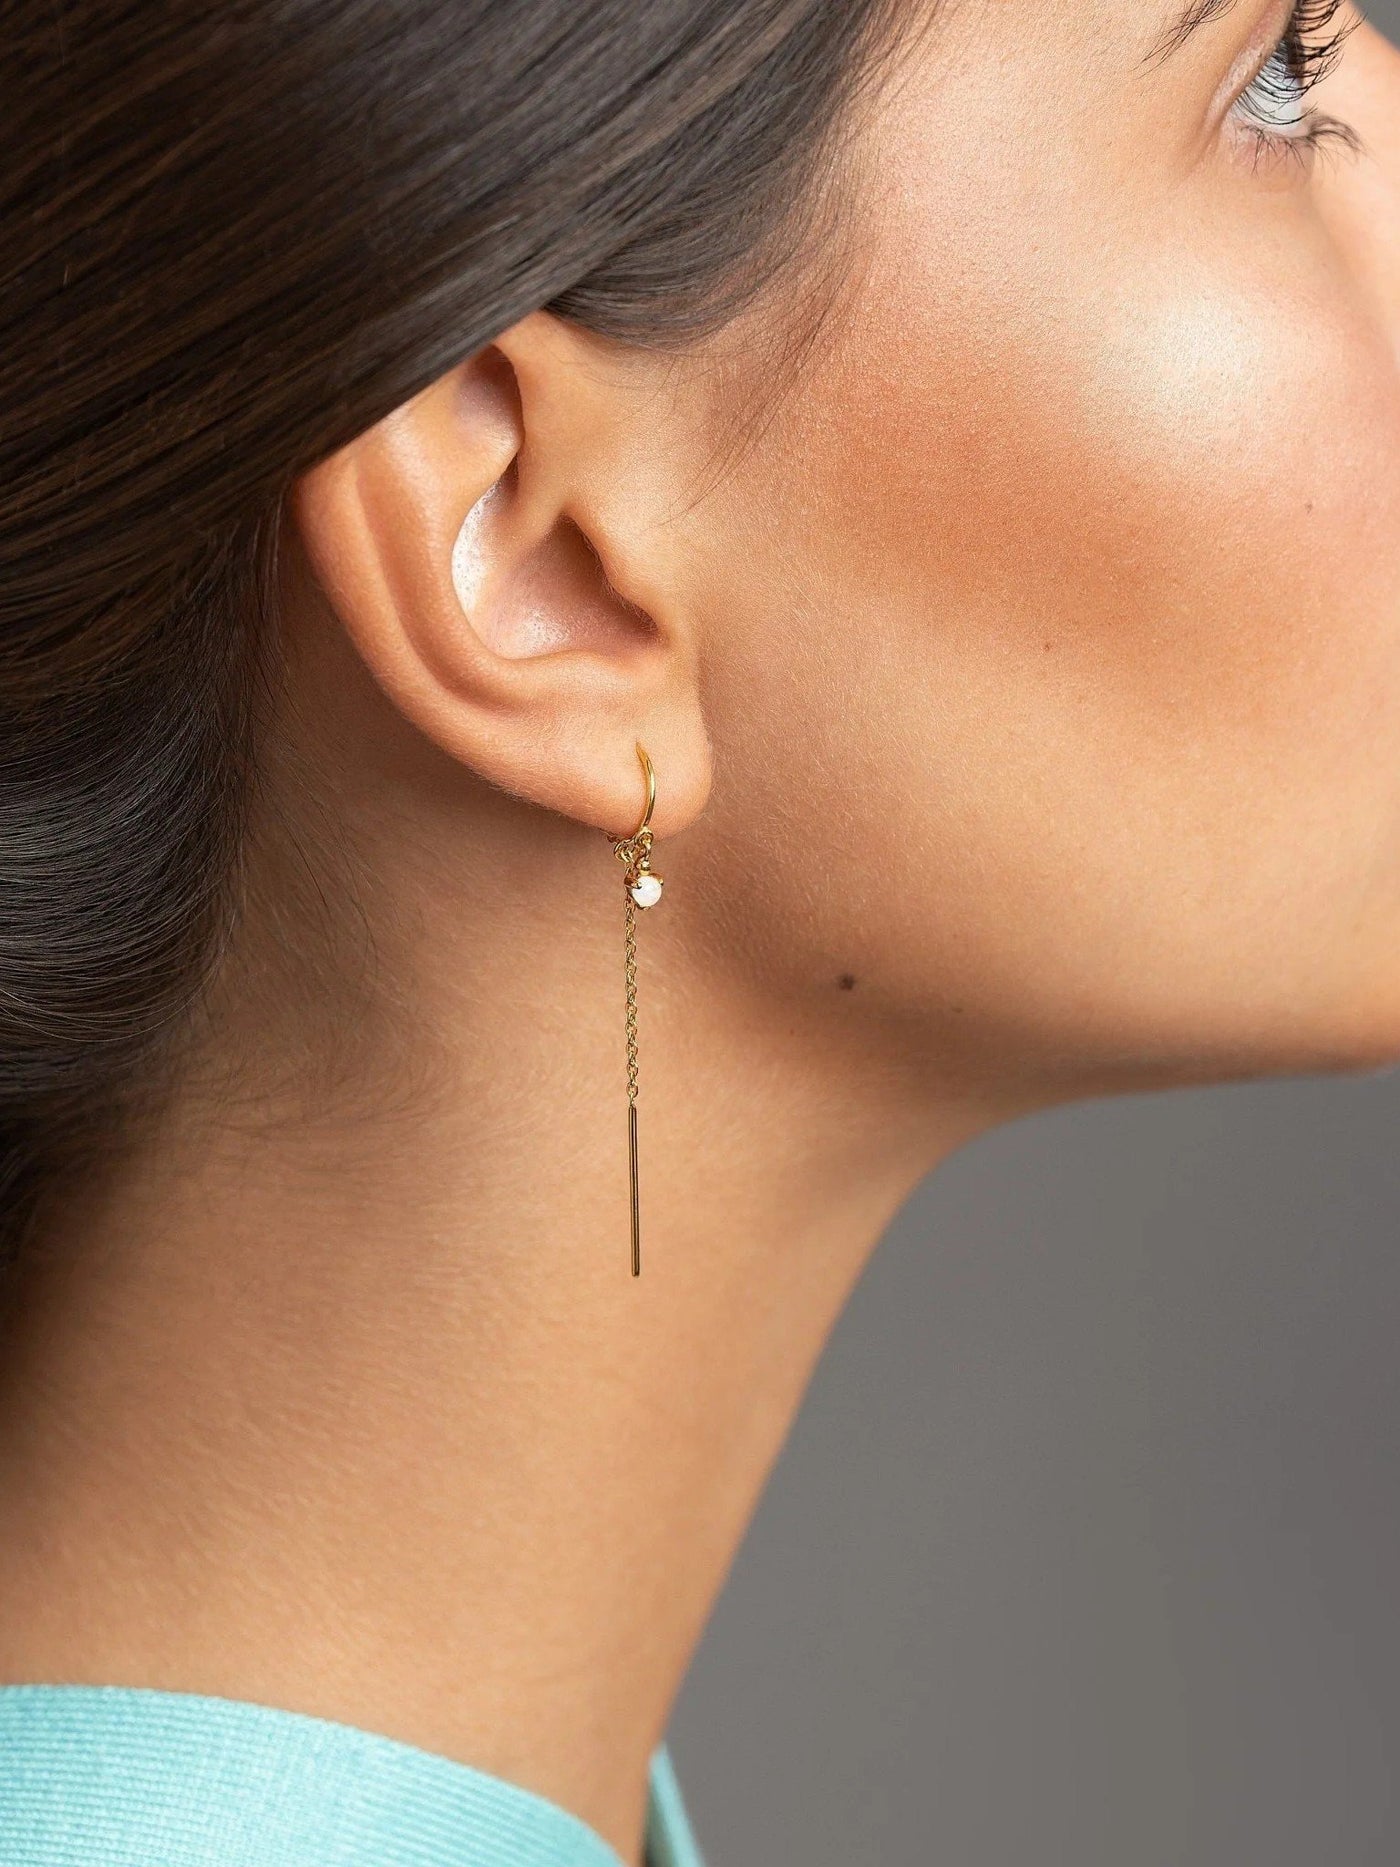 Ulfa Silver Droplet Ear Threader Earrings - 24K Gold PlatedTurquoise Opal 65 mmanti tarnish jewelrychain drop earringsLunai Jewelry